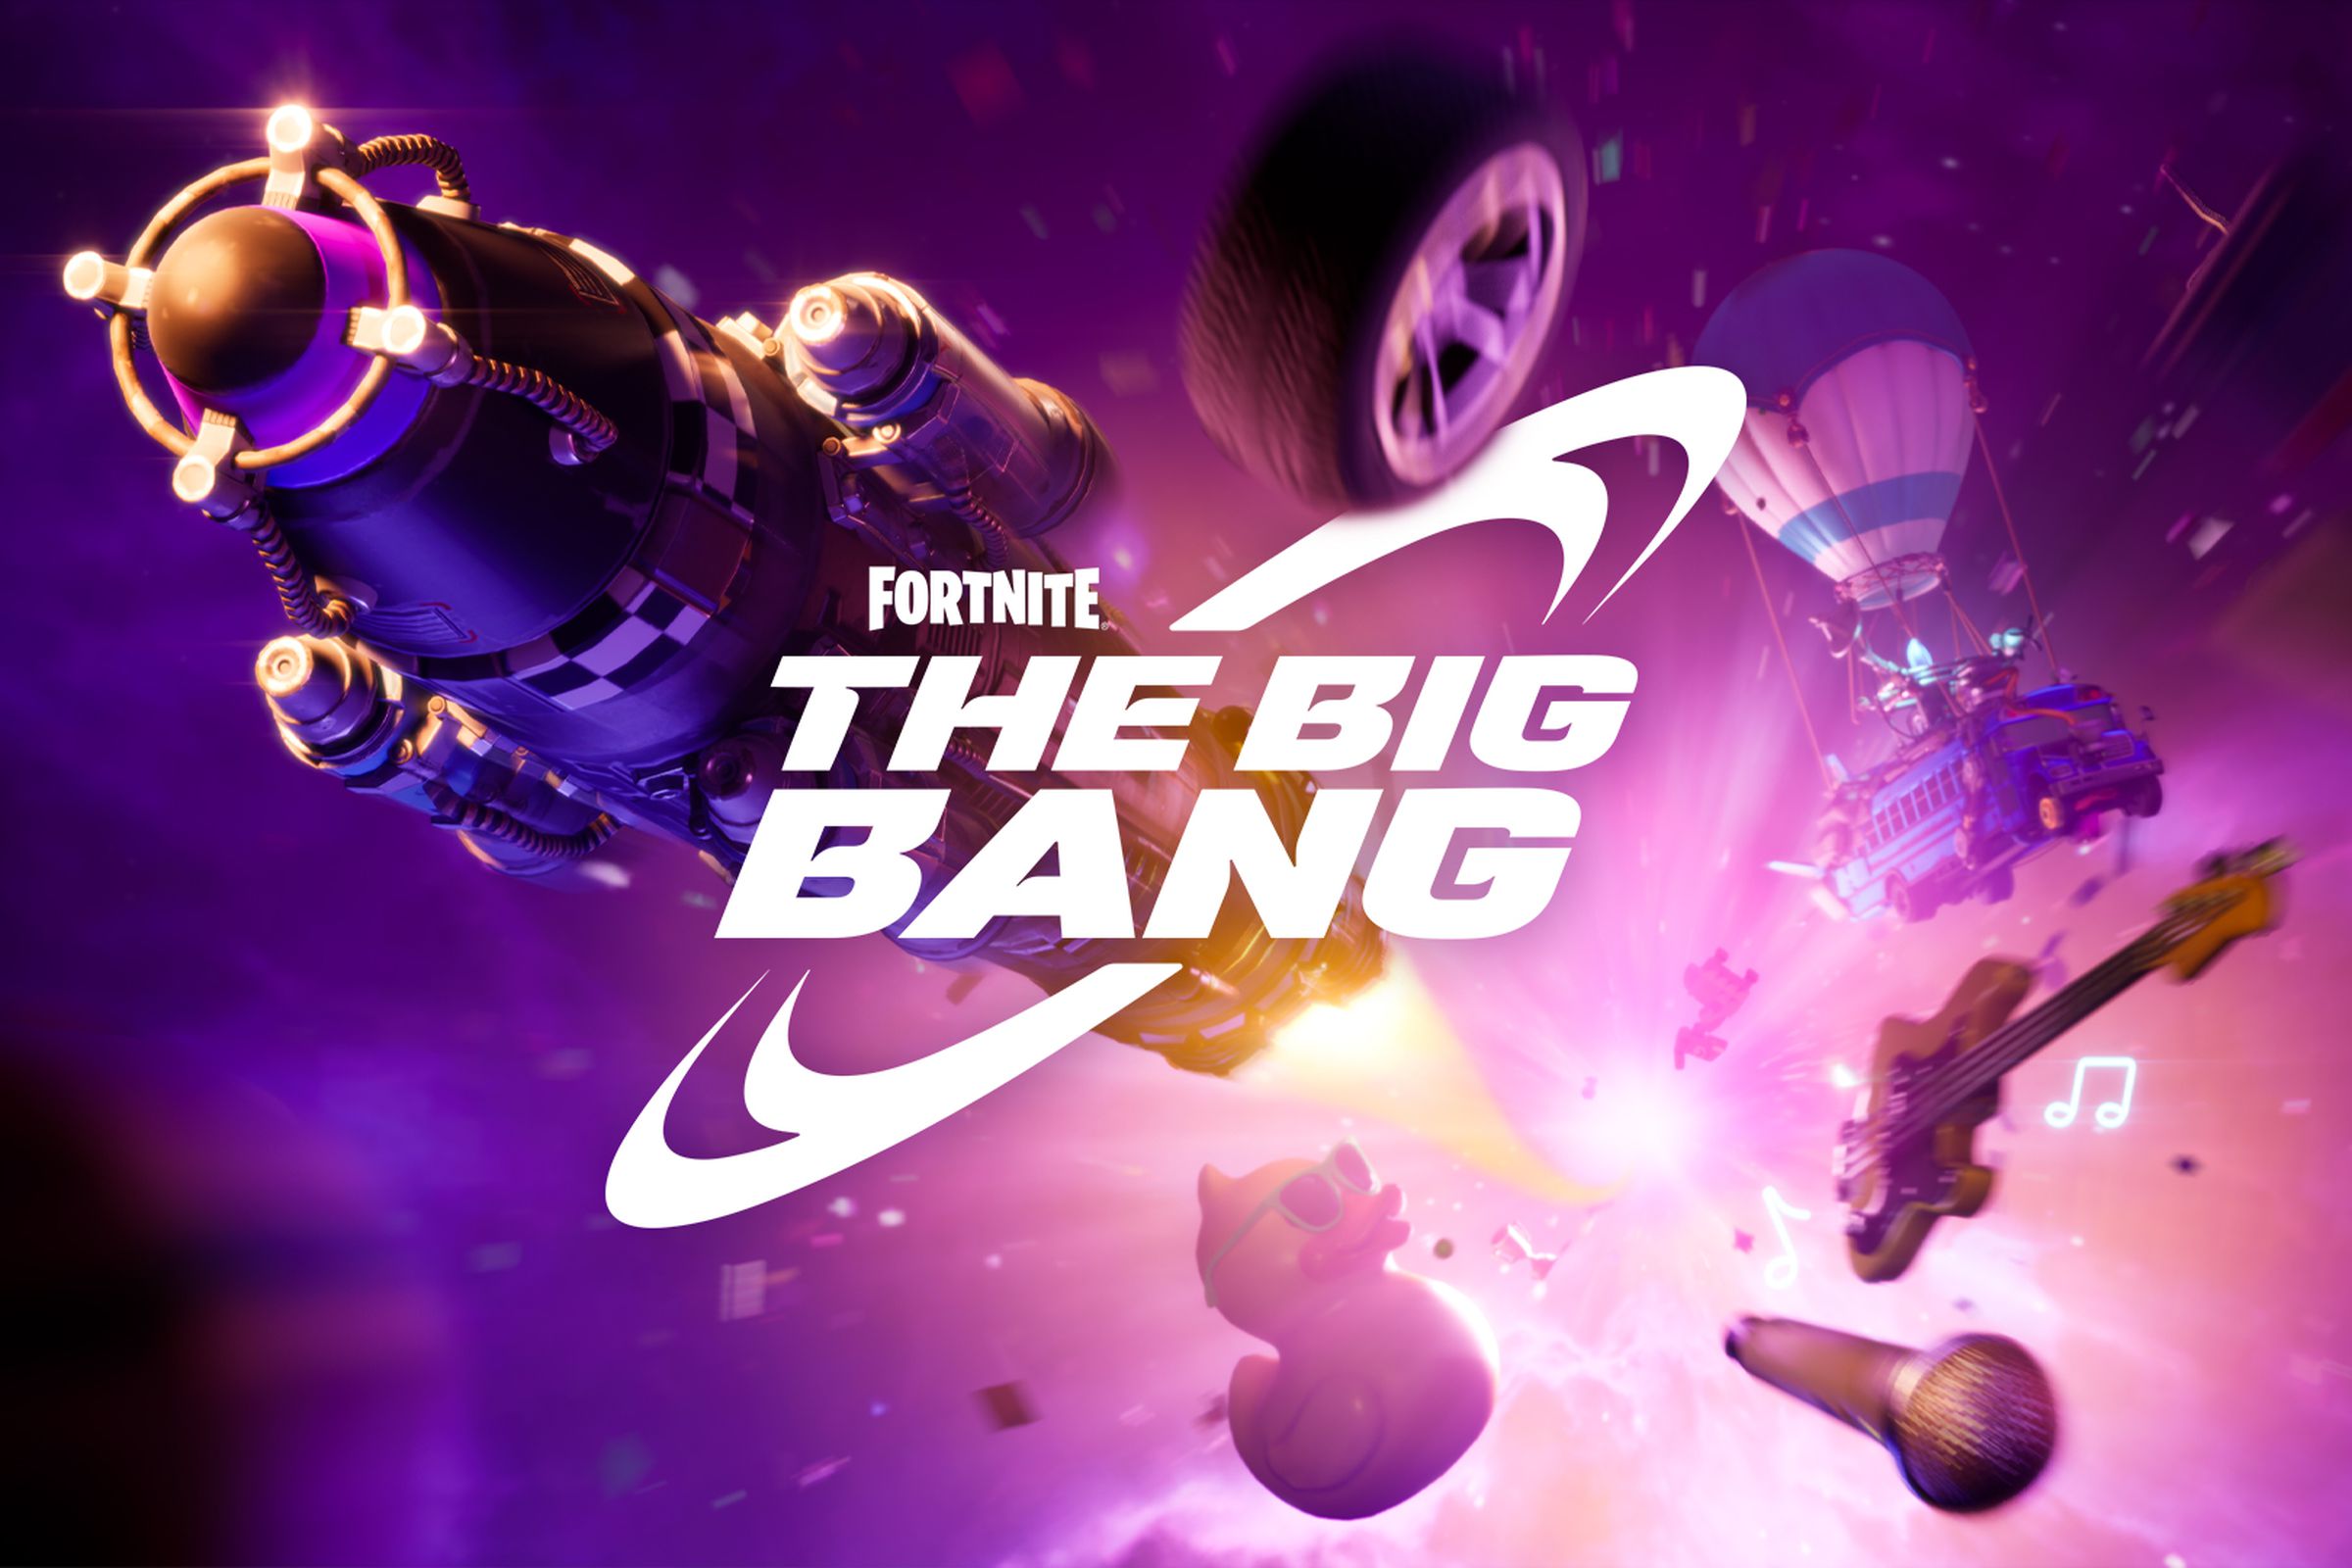 Promotional art for Fortnite’s Big Bang event.